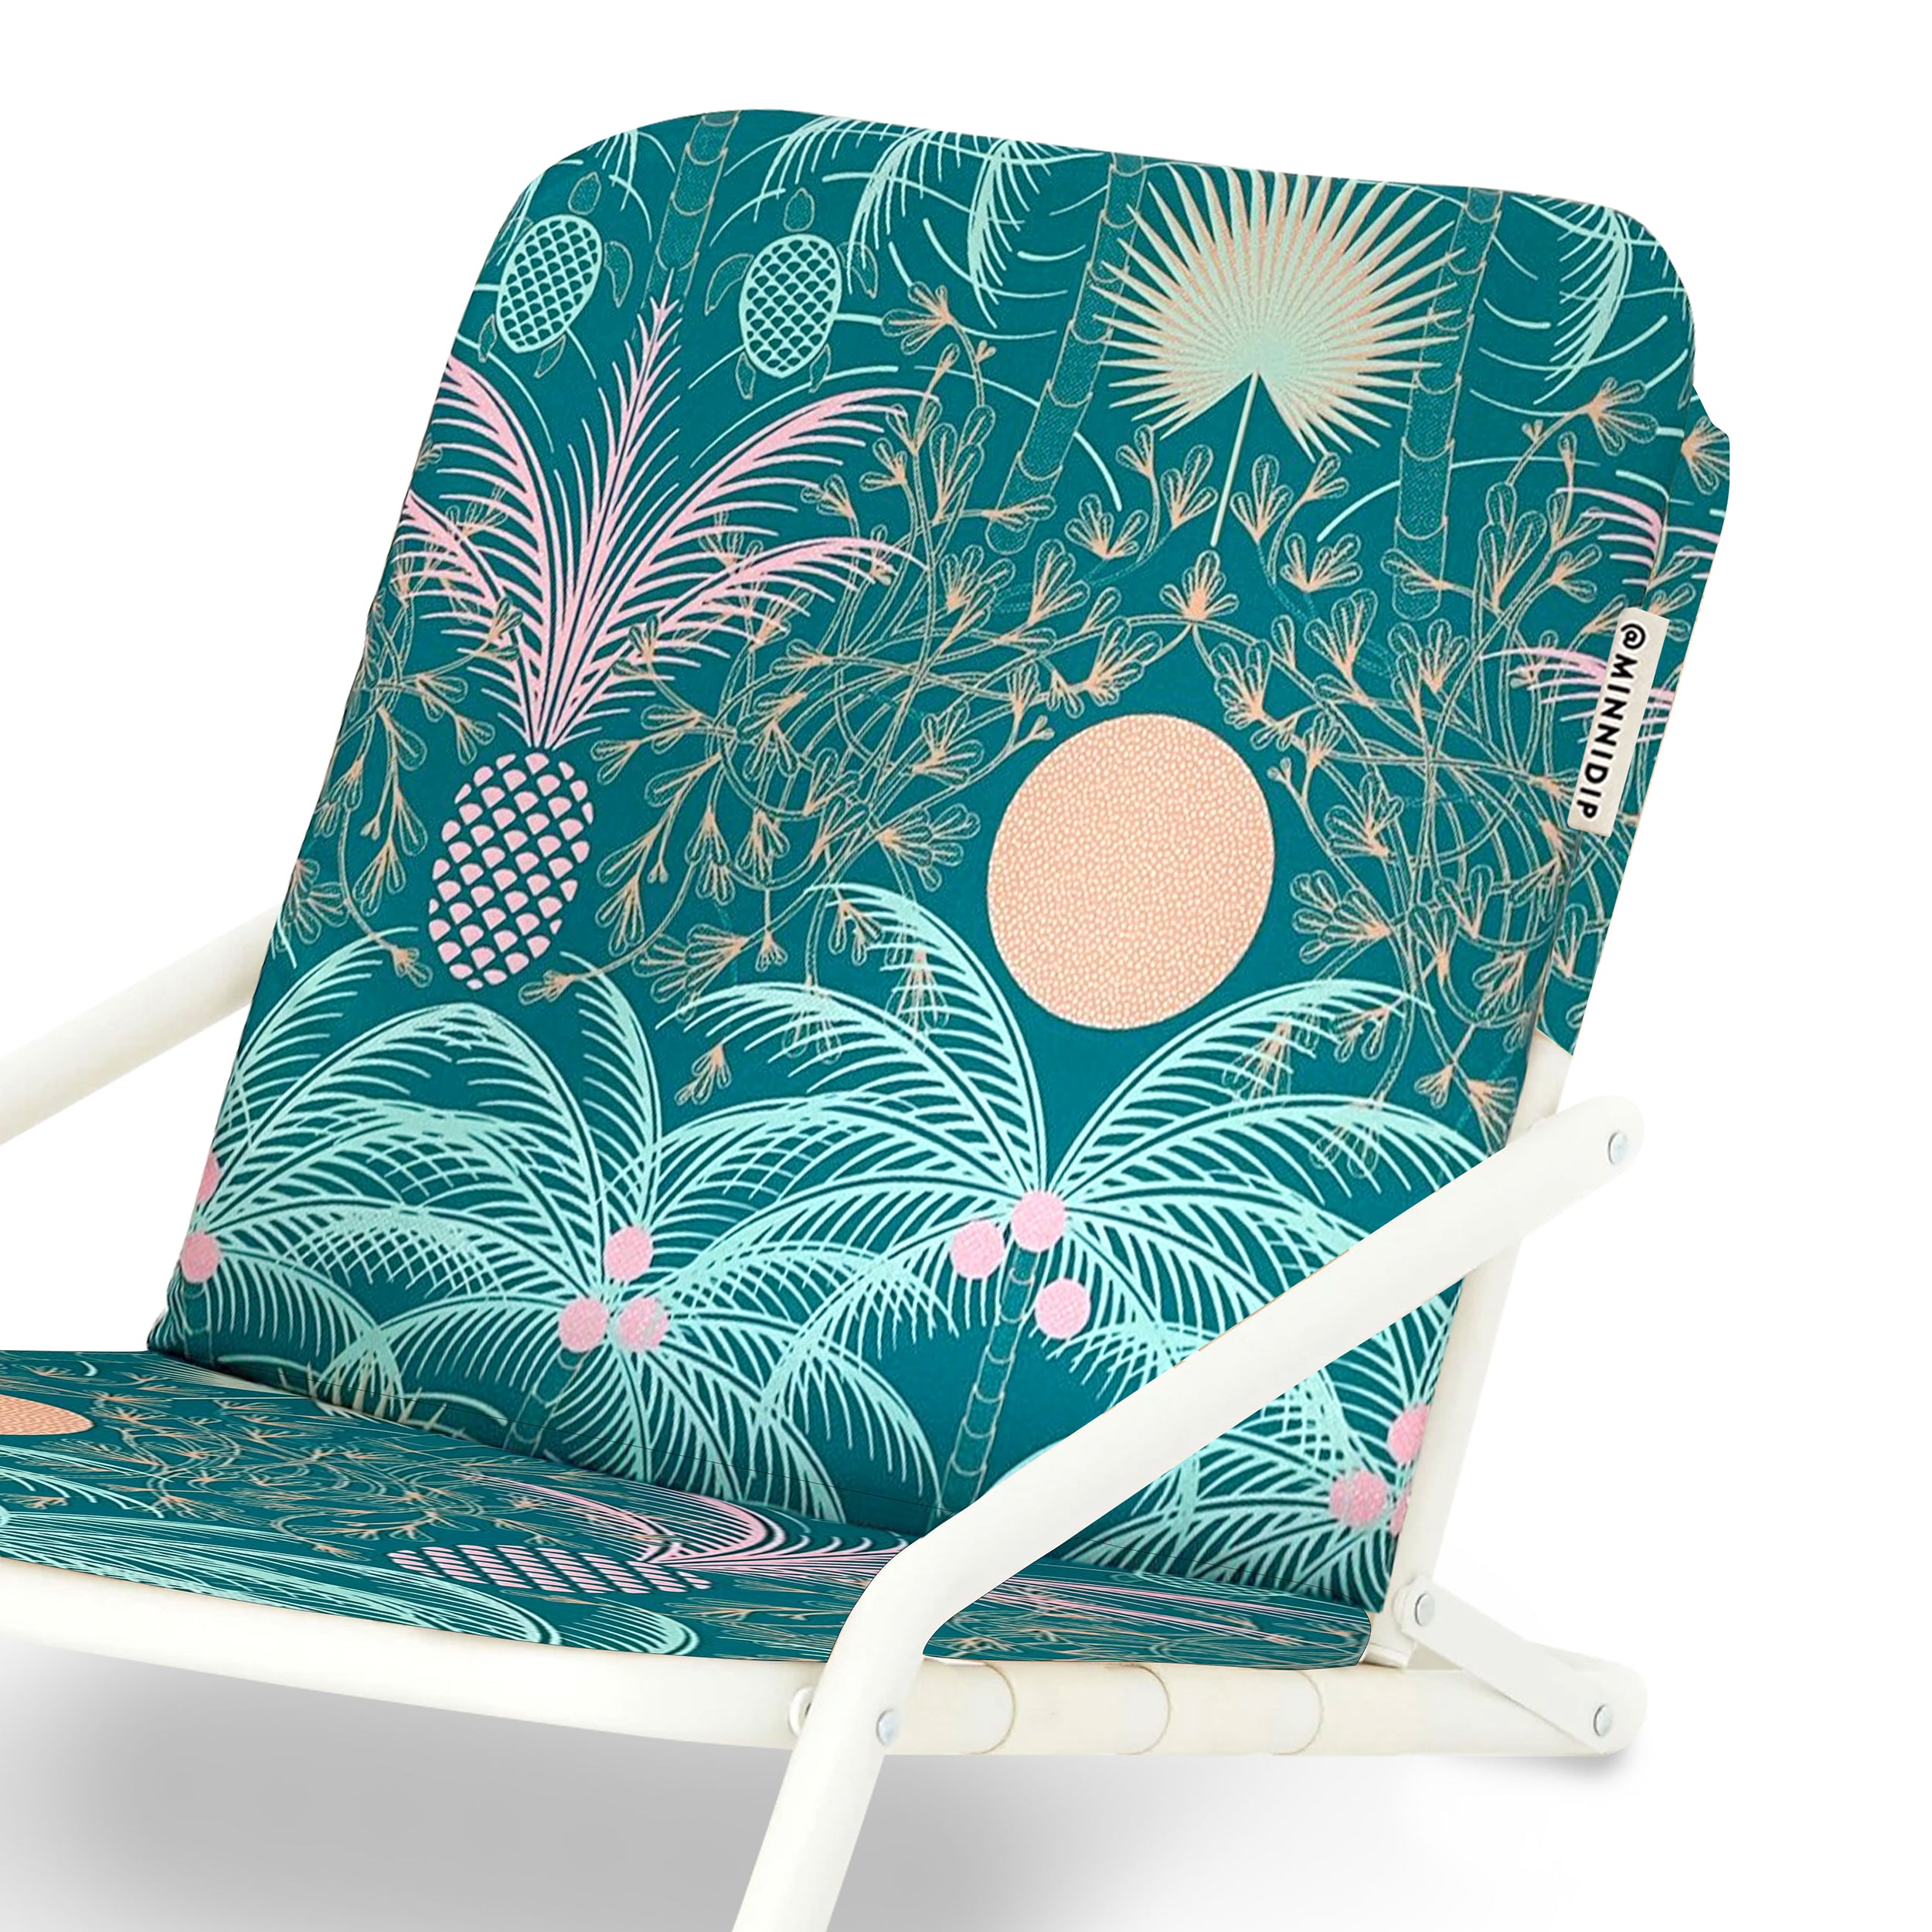 the TULUM Beach Chair